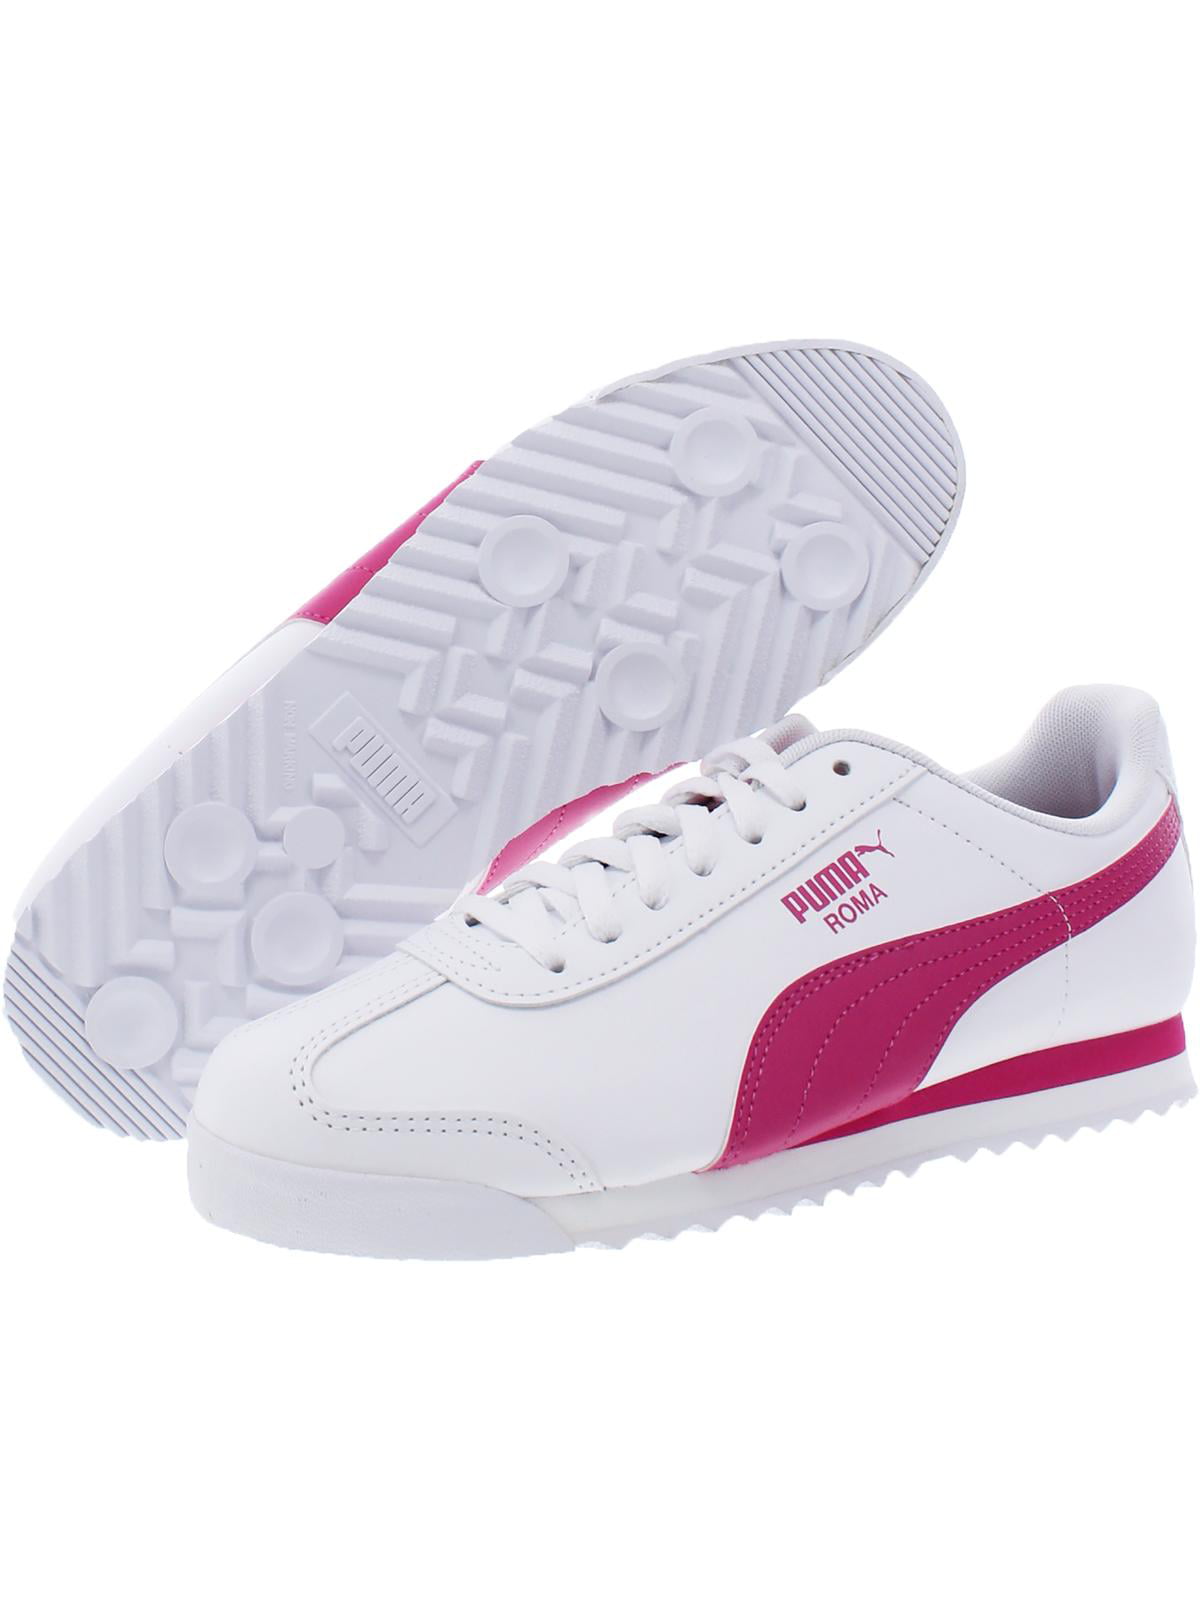 Puma Girls Roma Basic Jr Faux Leather Solid Sneakers Pink 6 Medium (B,M) Big Kid -